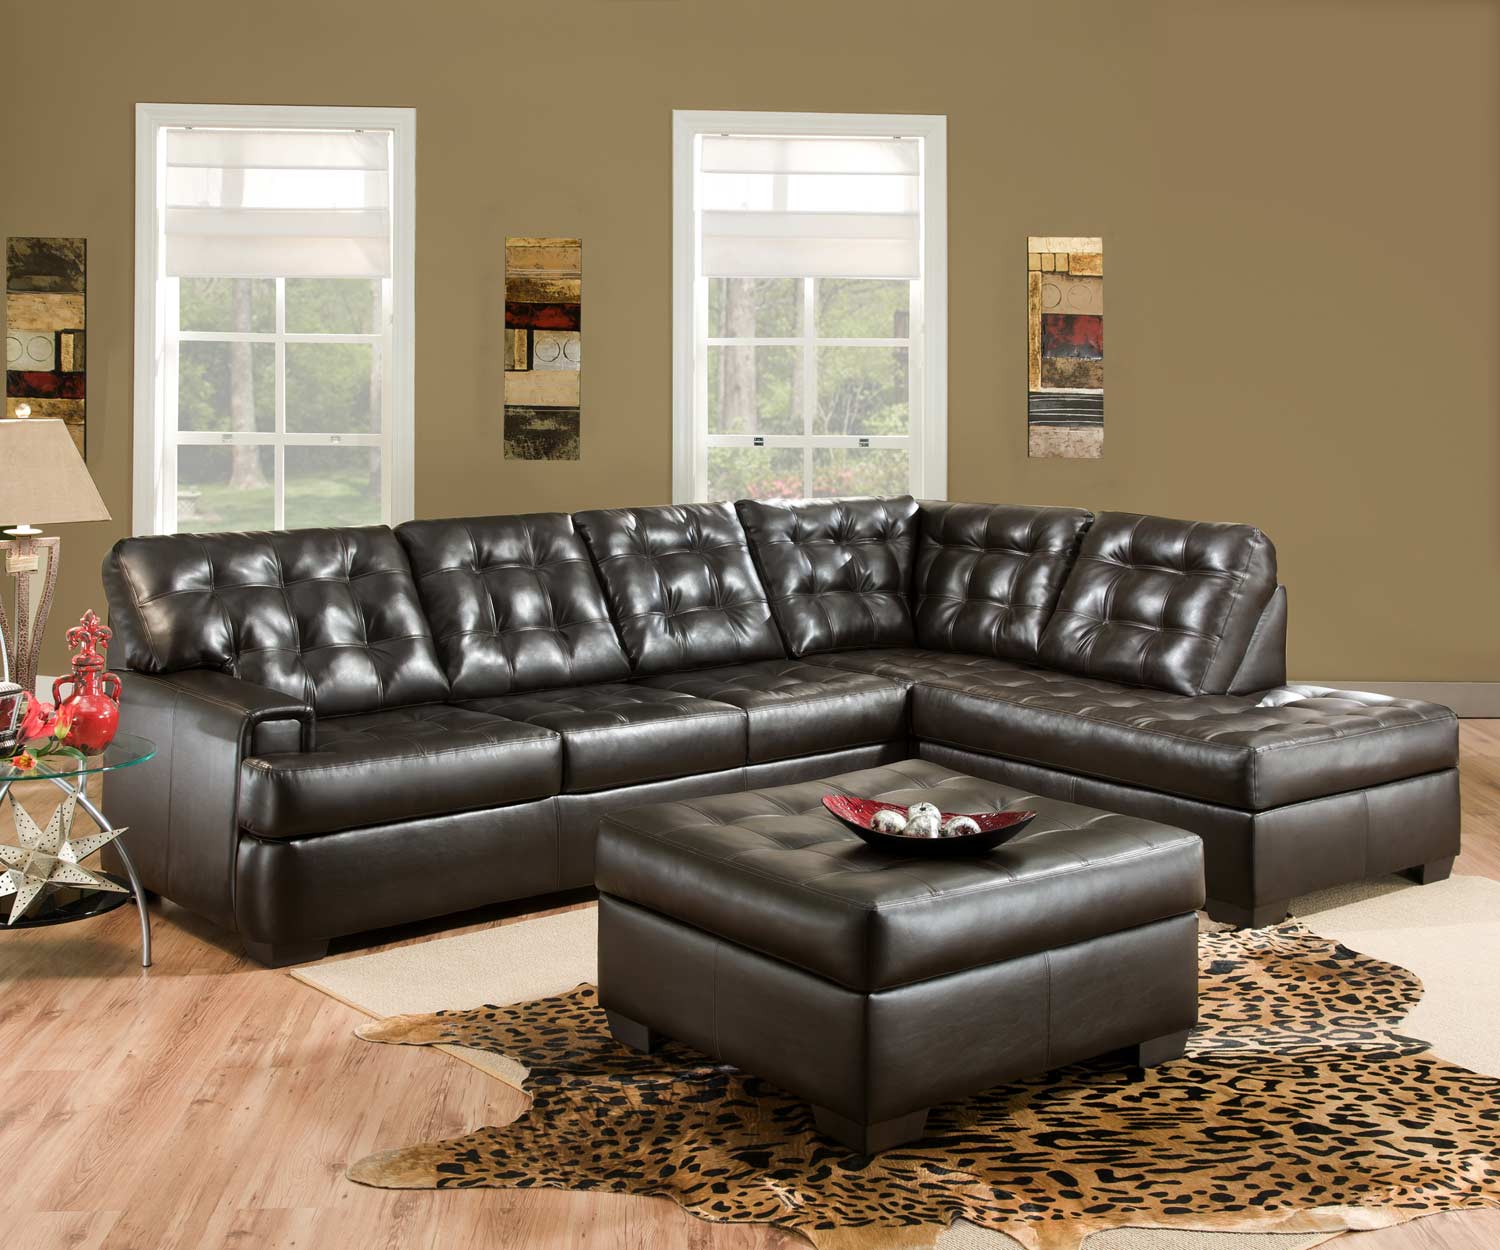 global furniture usa leather sofa